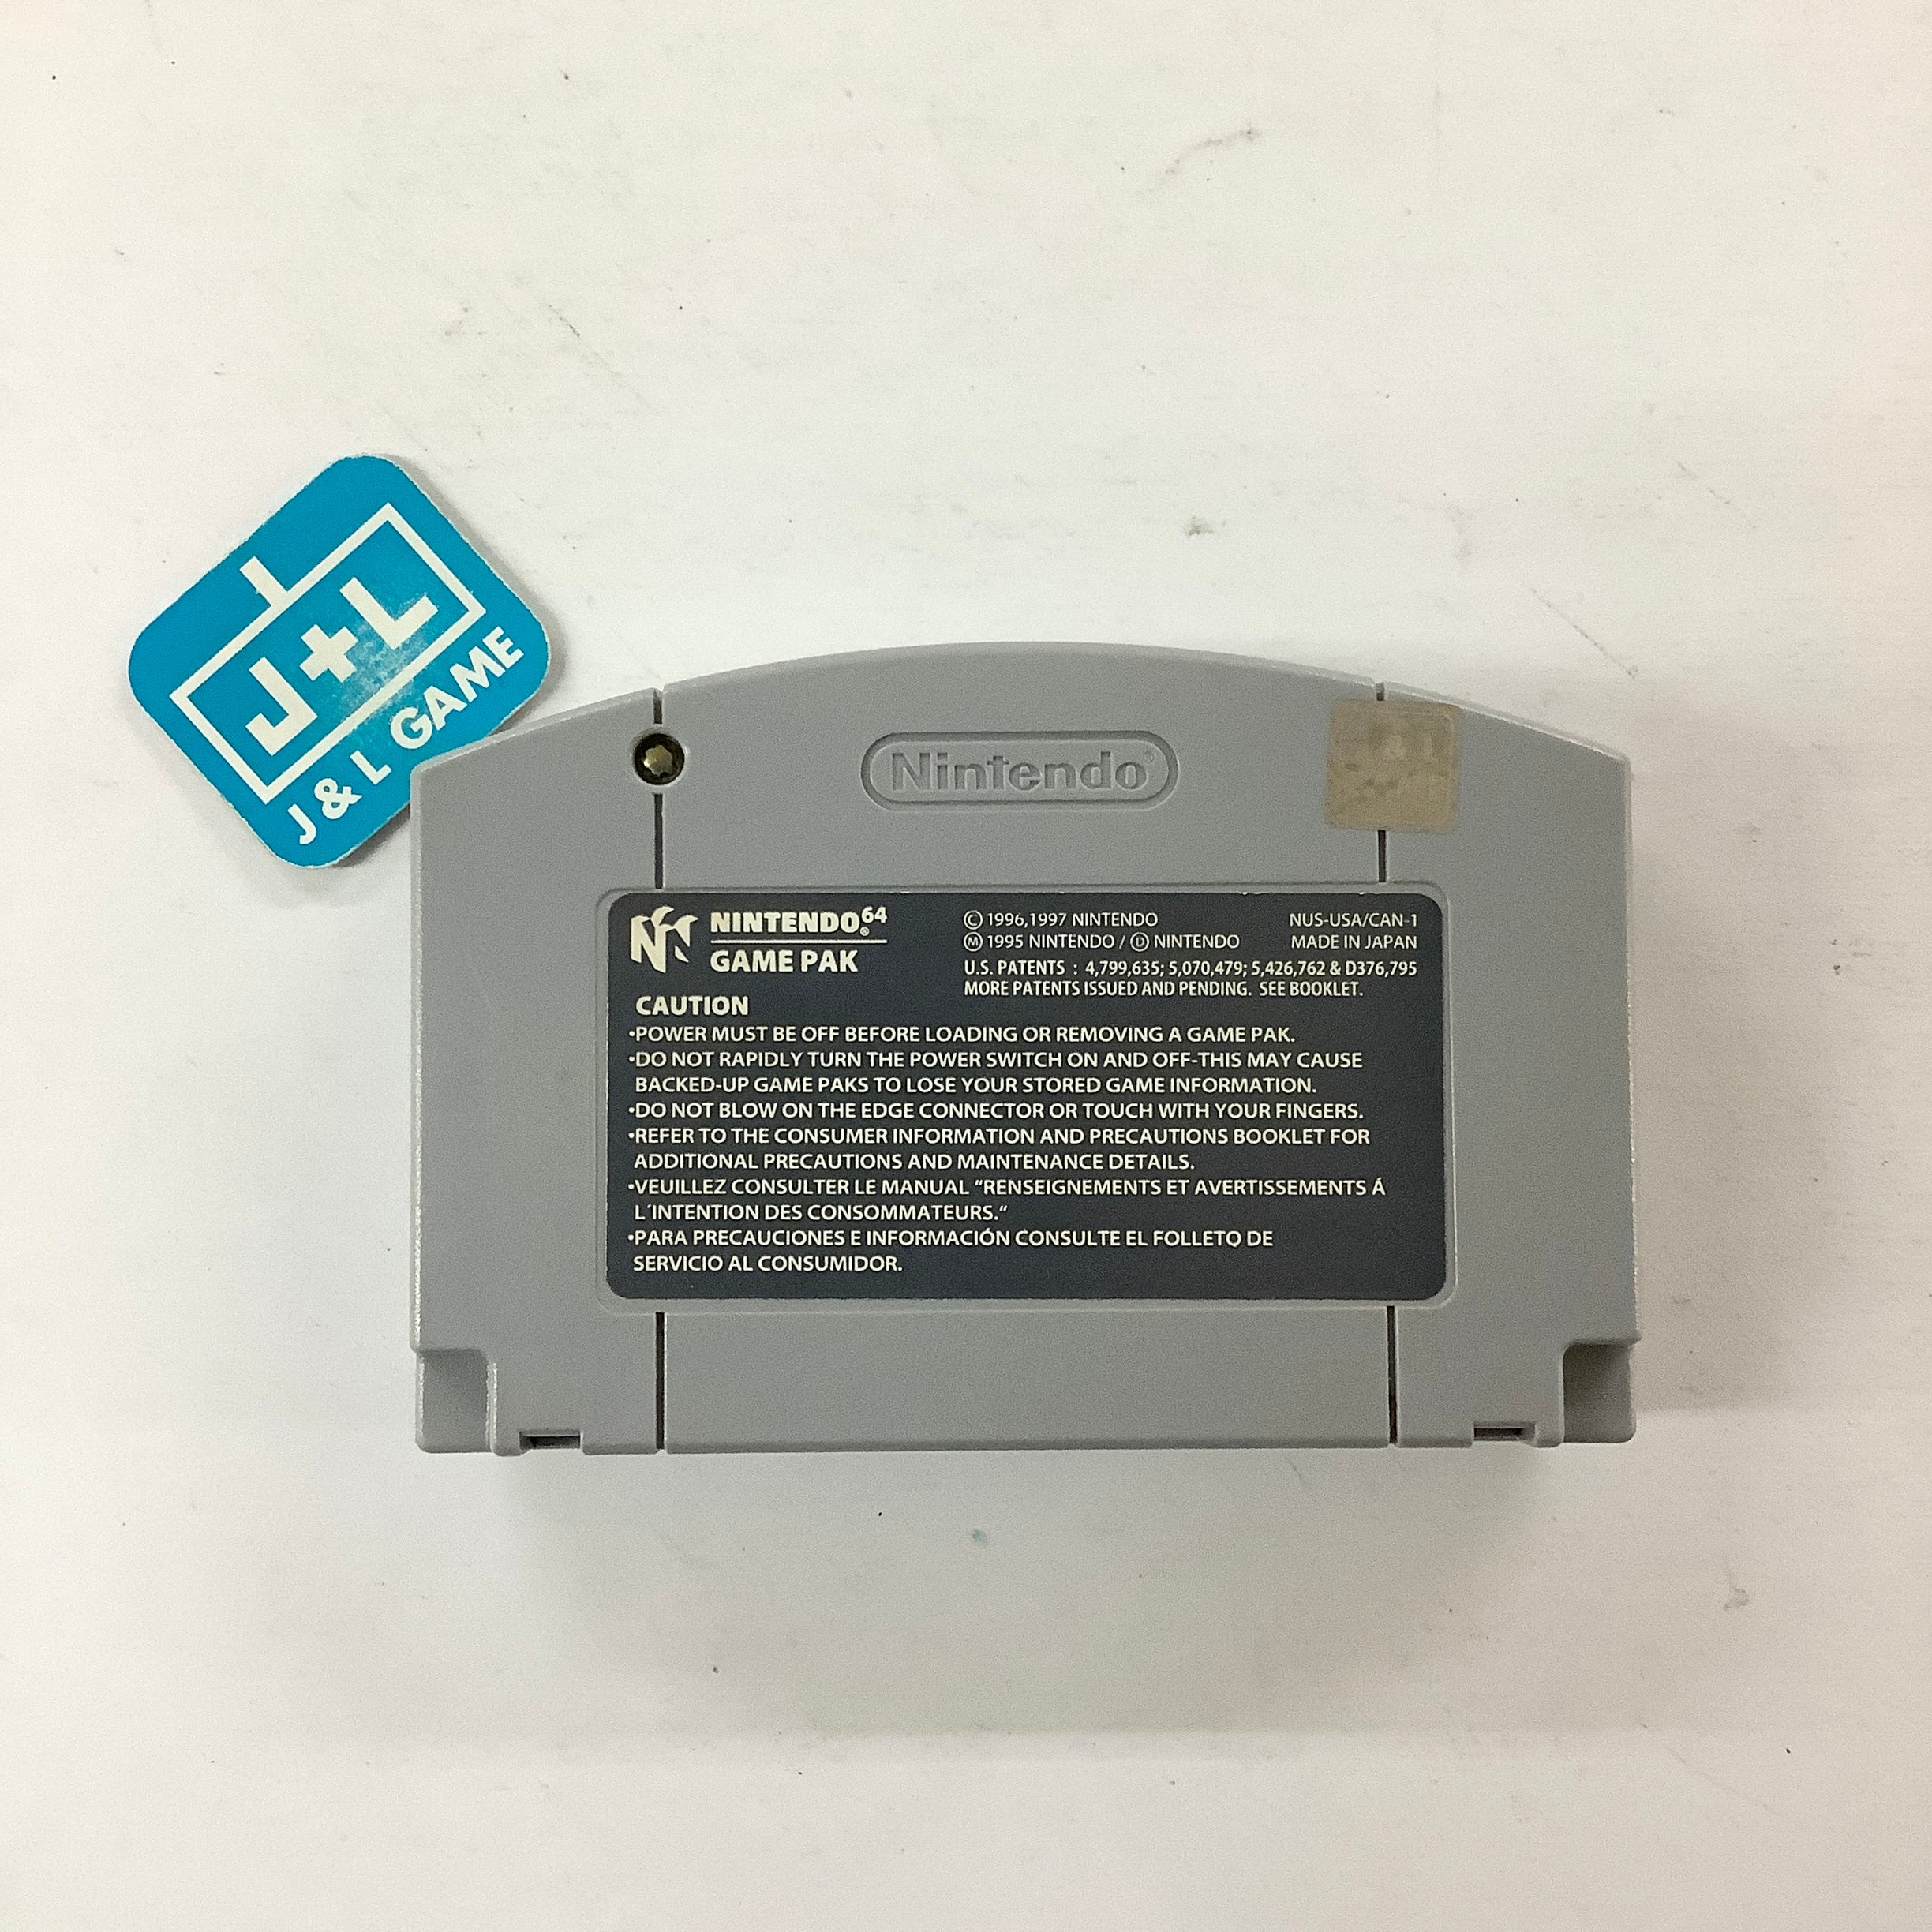 Glover - (N64) Nintendo 64 [Pre-Owned] Video Games Hasbro Interactive   